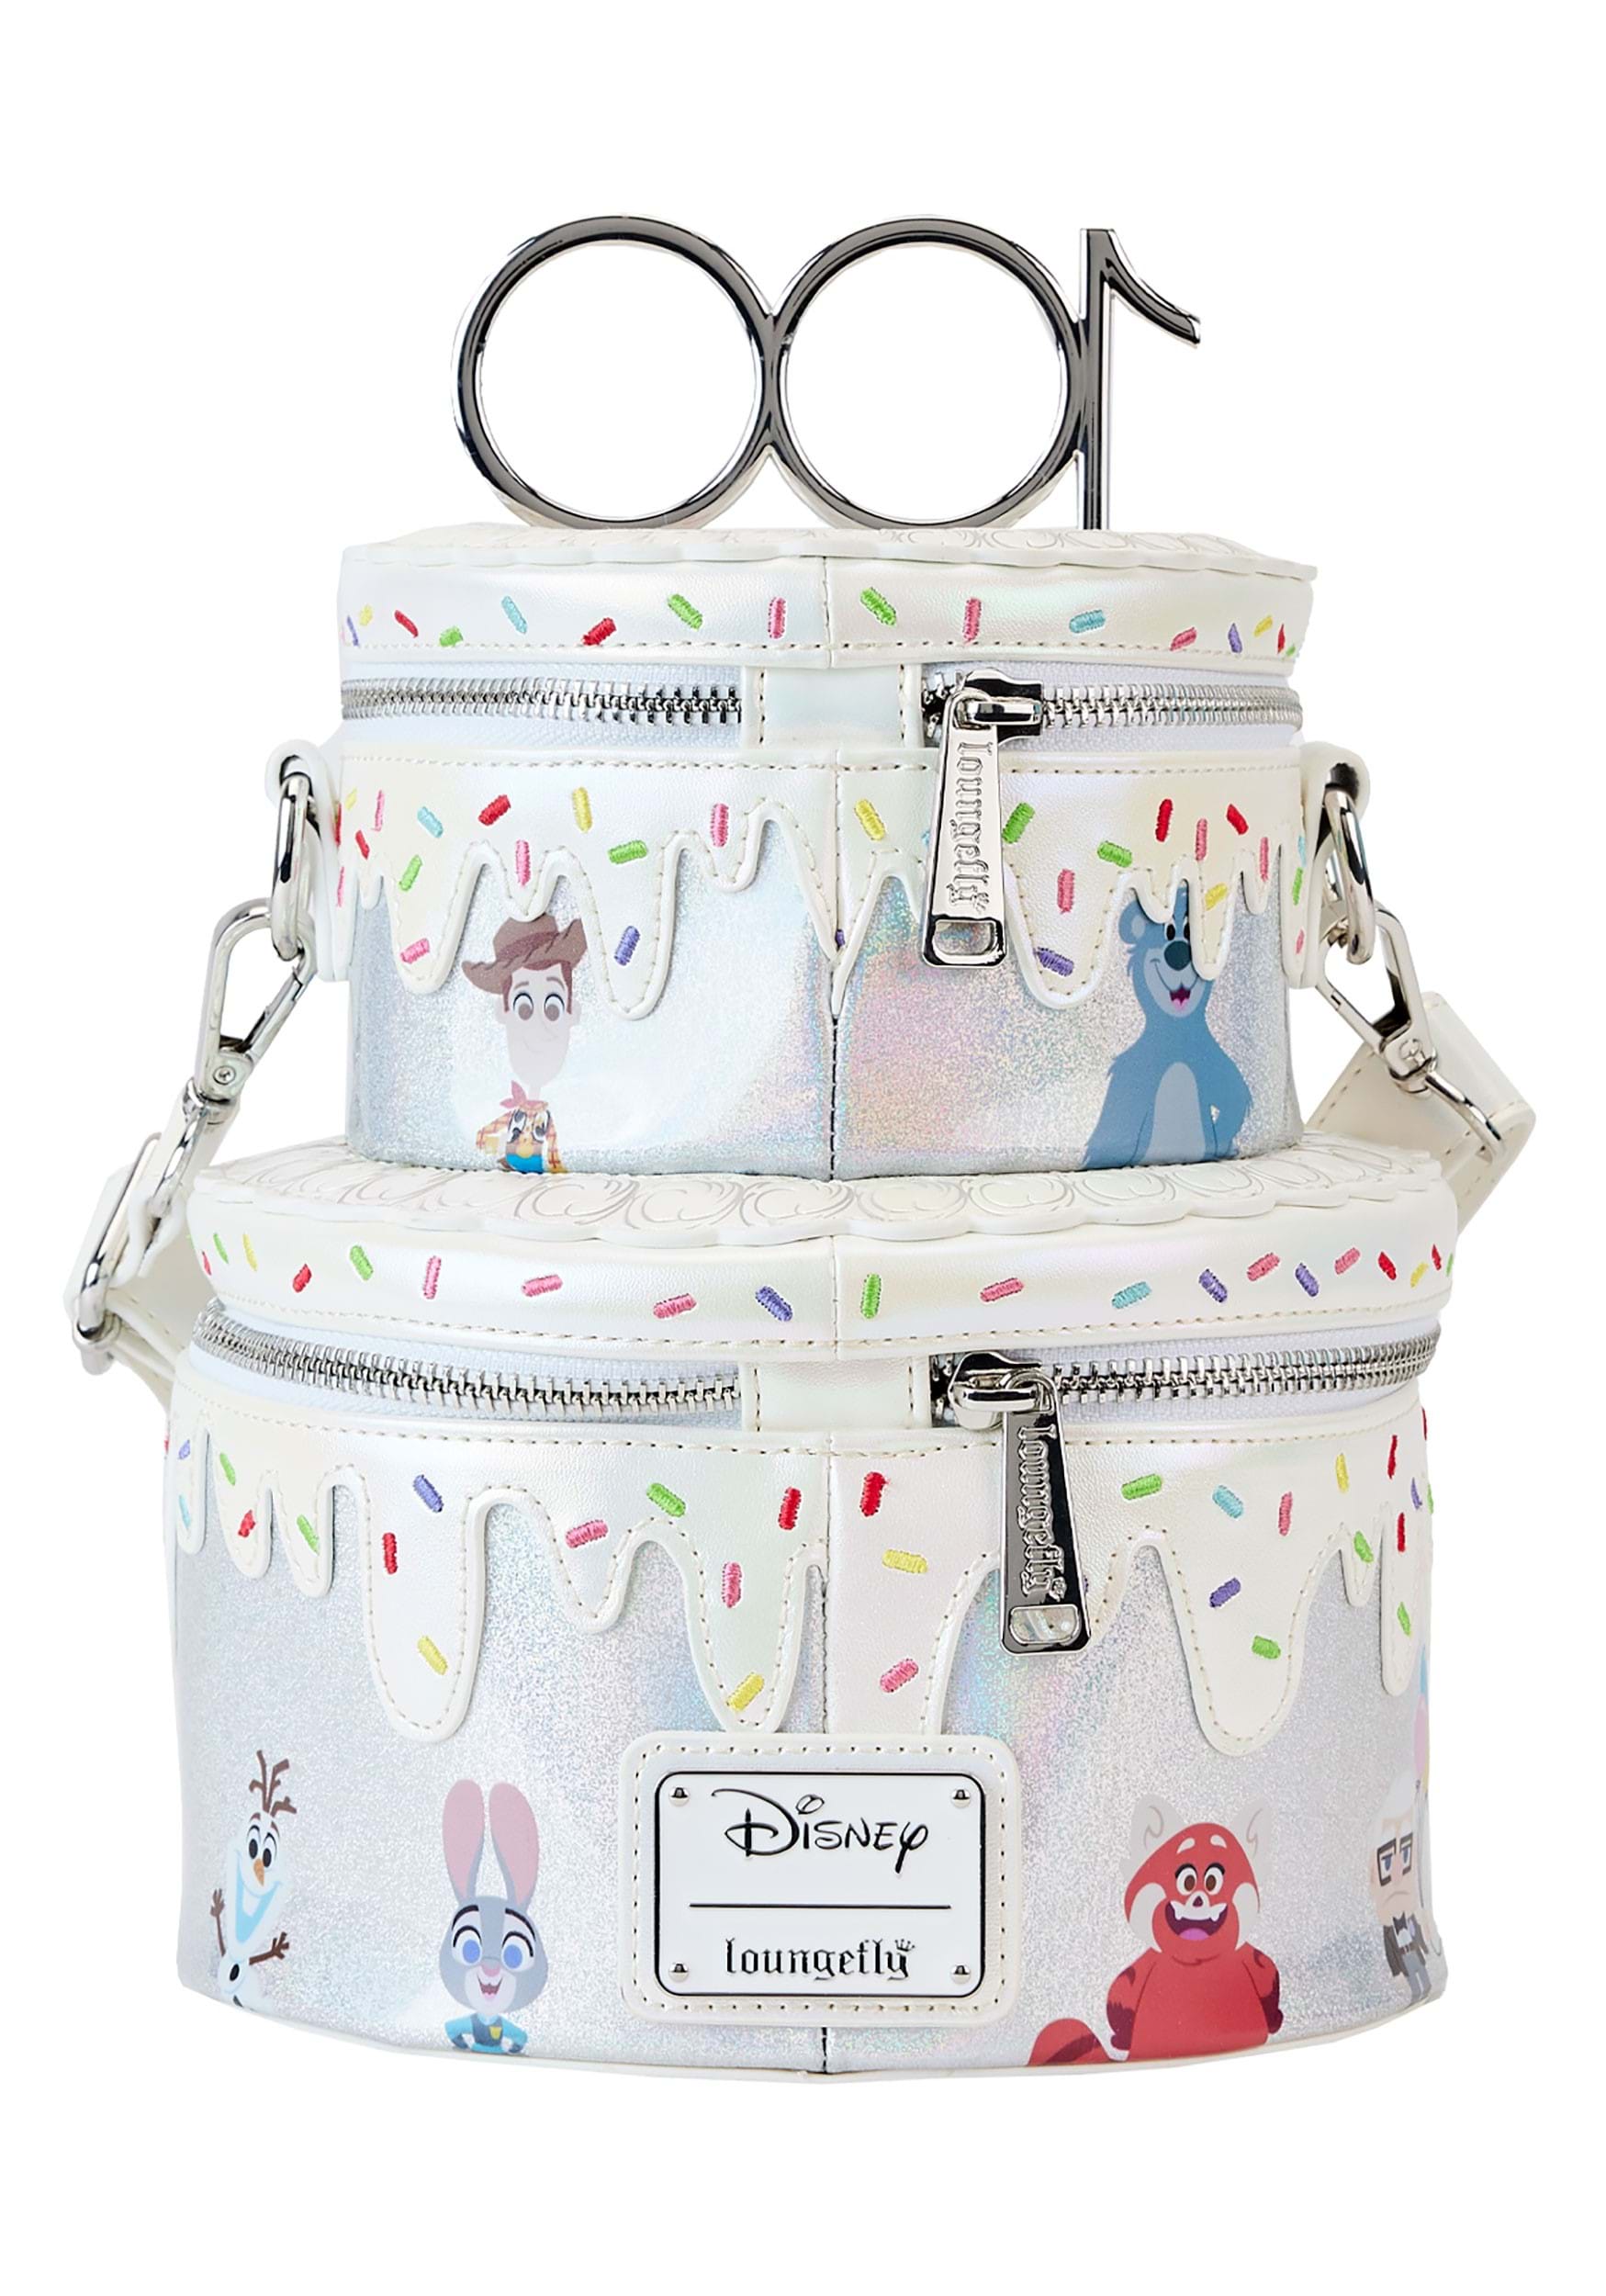 Beauty Wishes Makeup Bag: Disney100